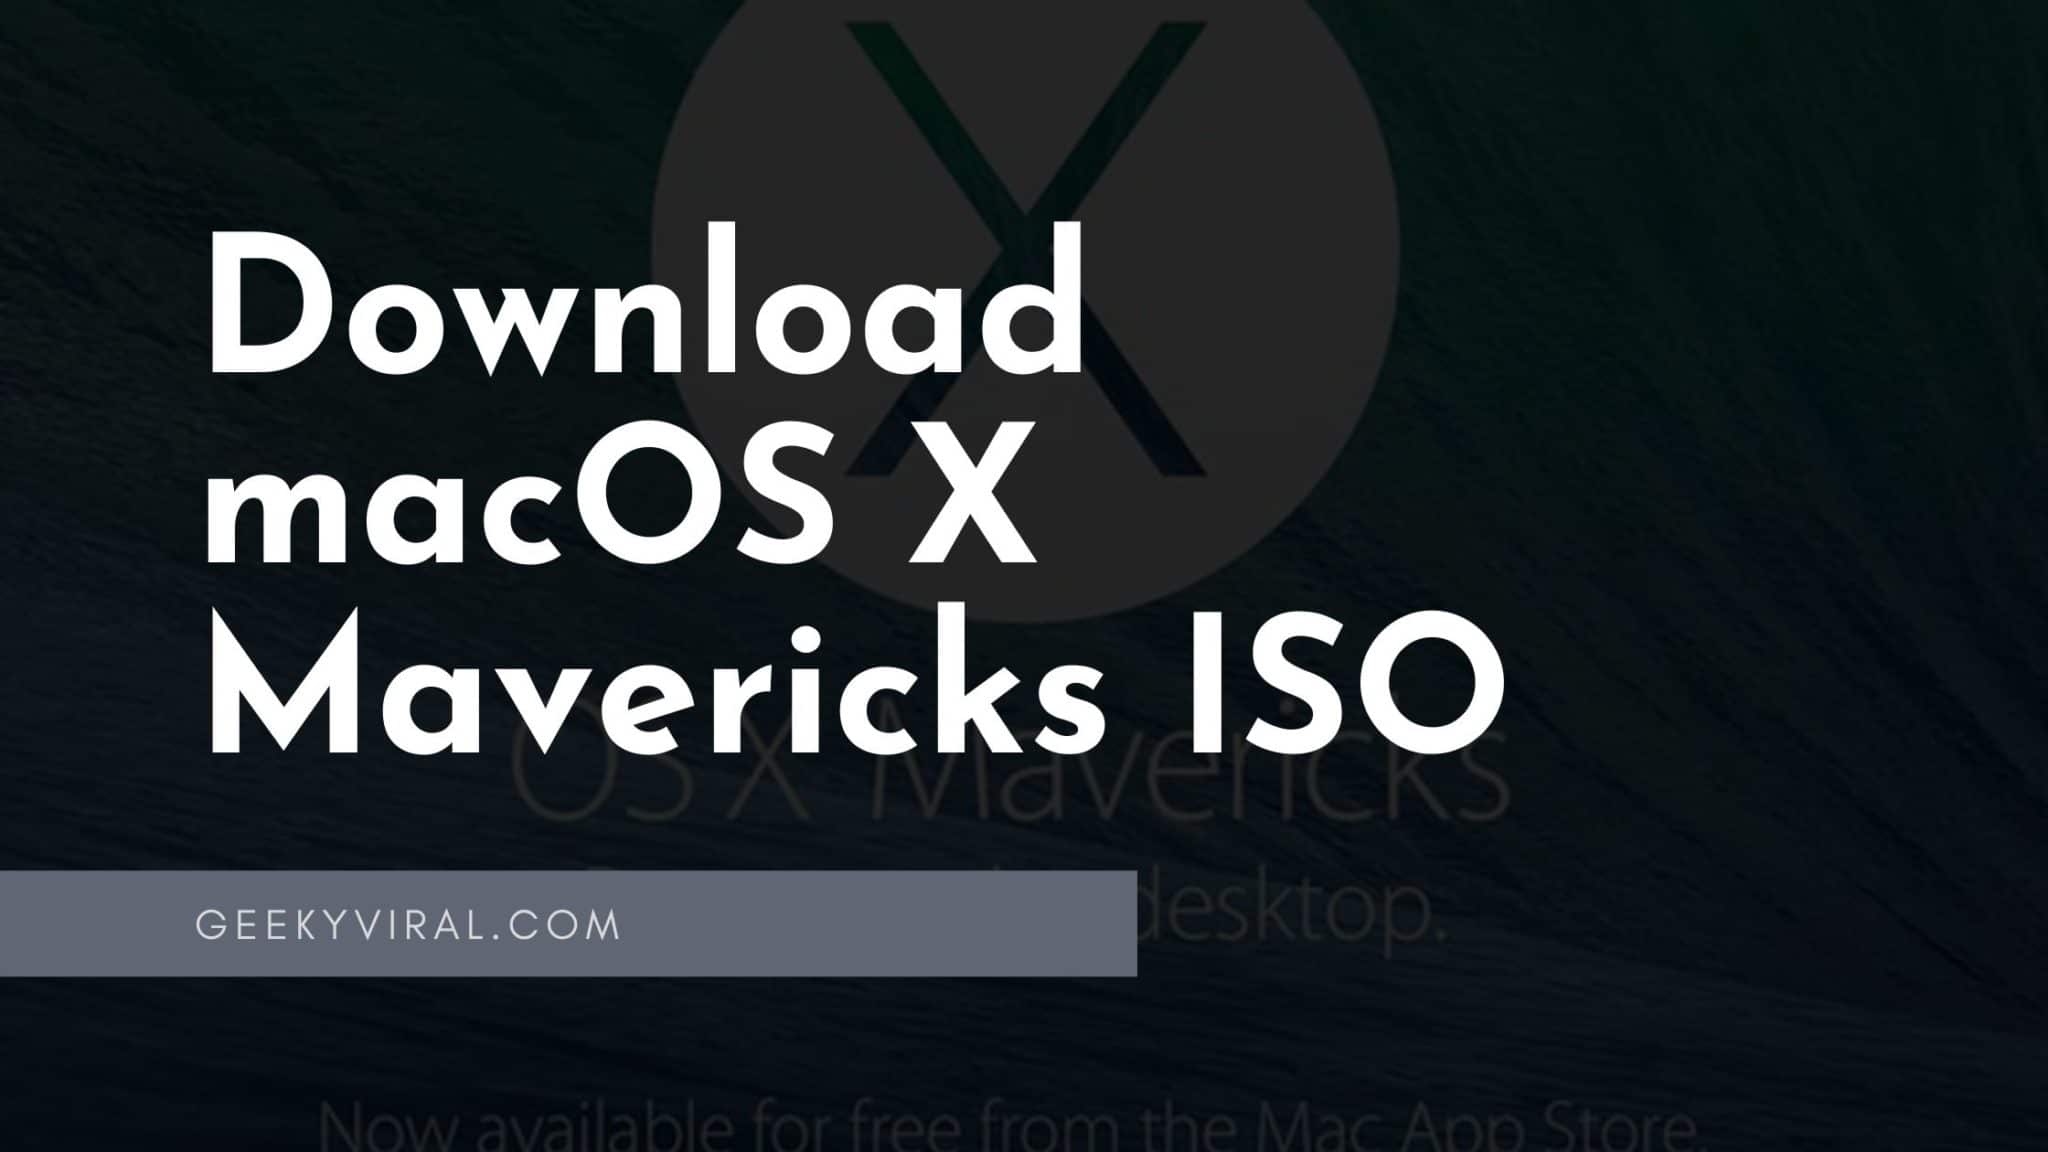 download mac os x maverick iso free and safe